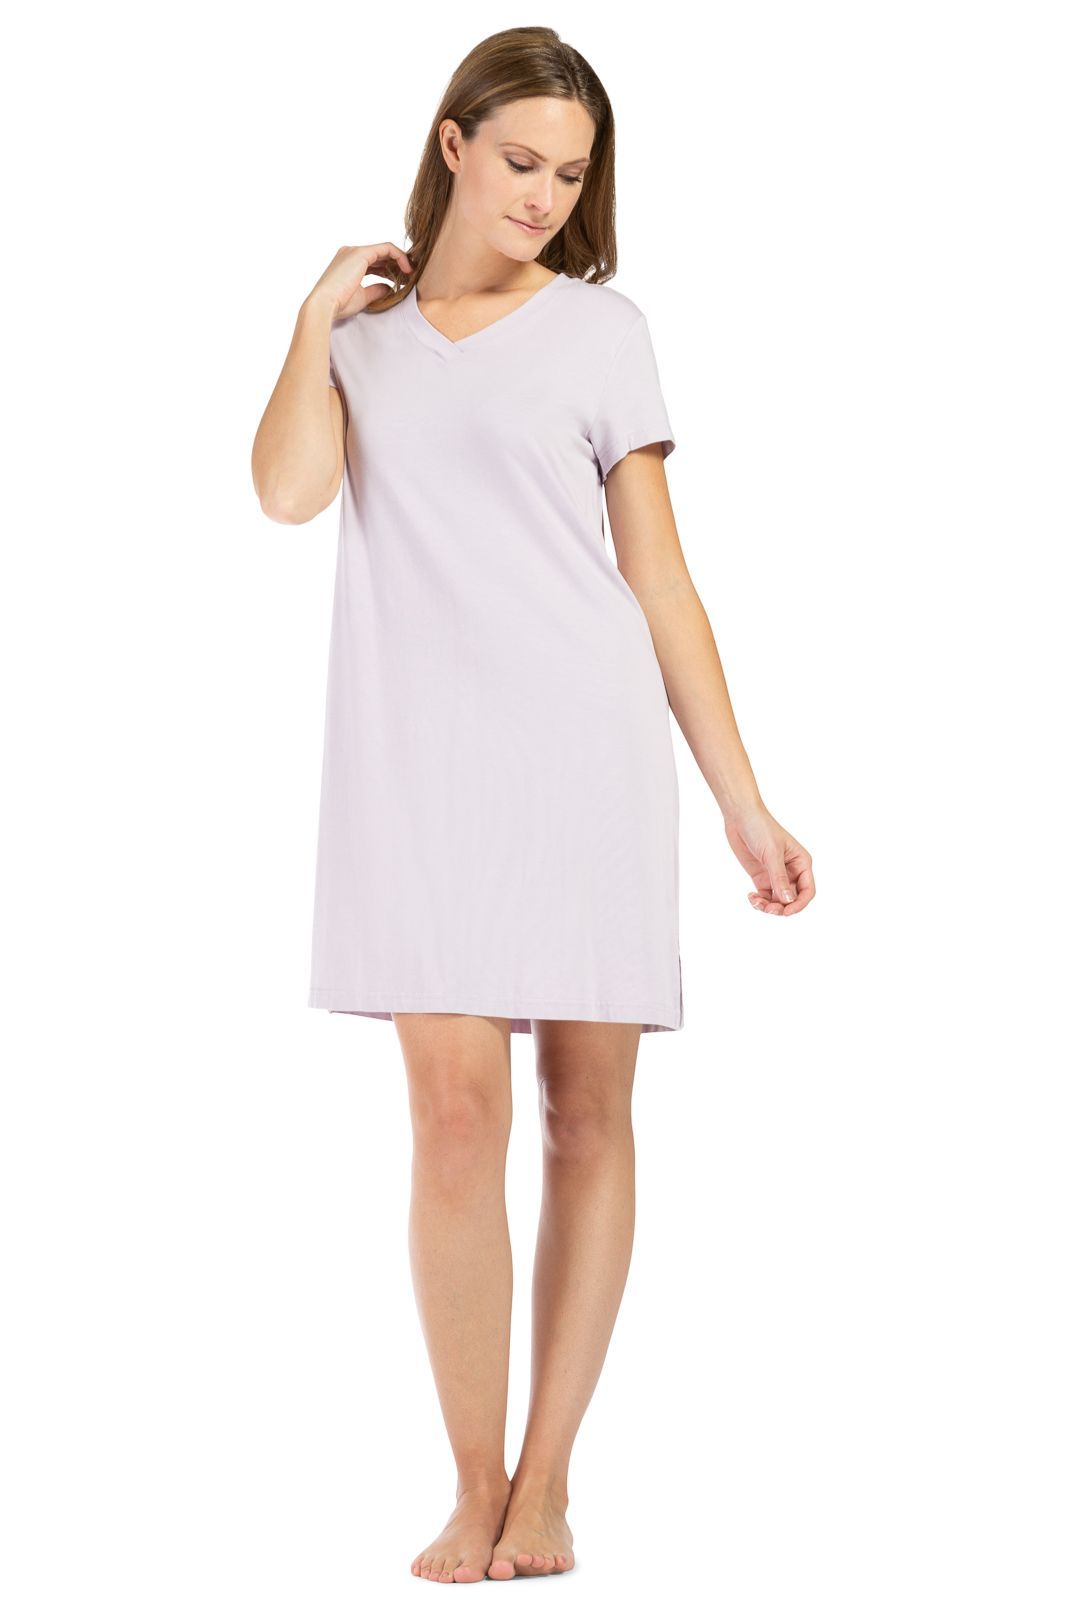 Nightgowns for Women Soft Short Sleeve Full Length Night Shirts Sleepw -  FemoFit